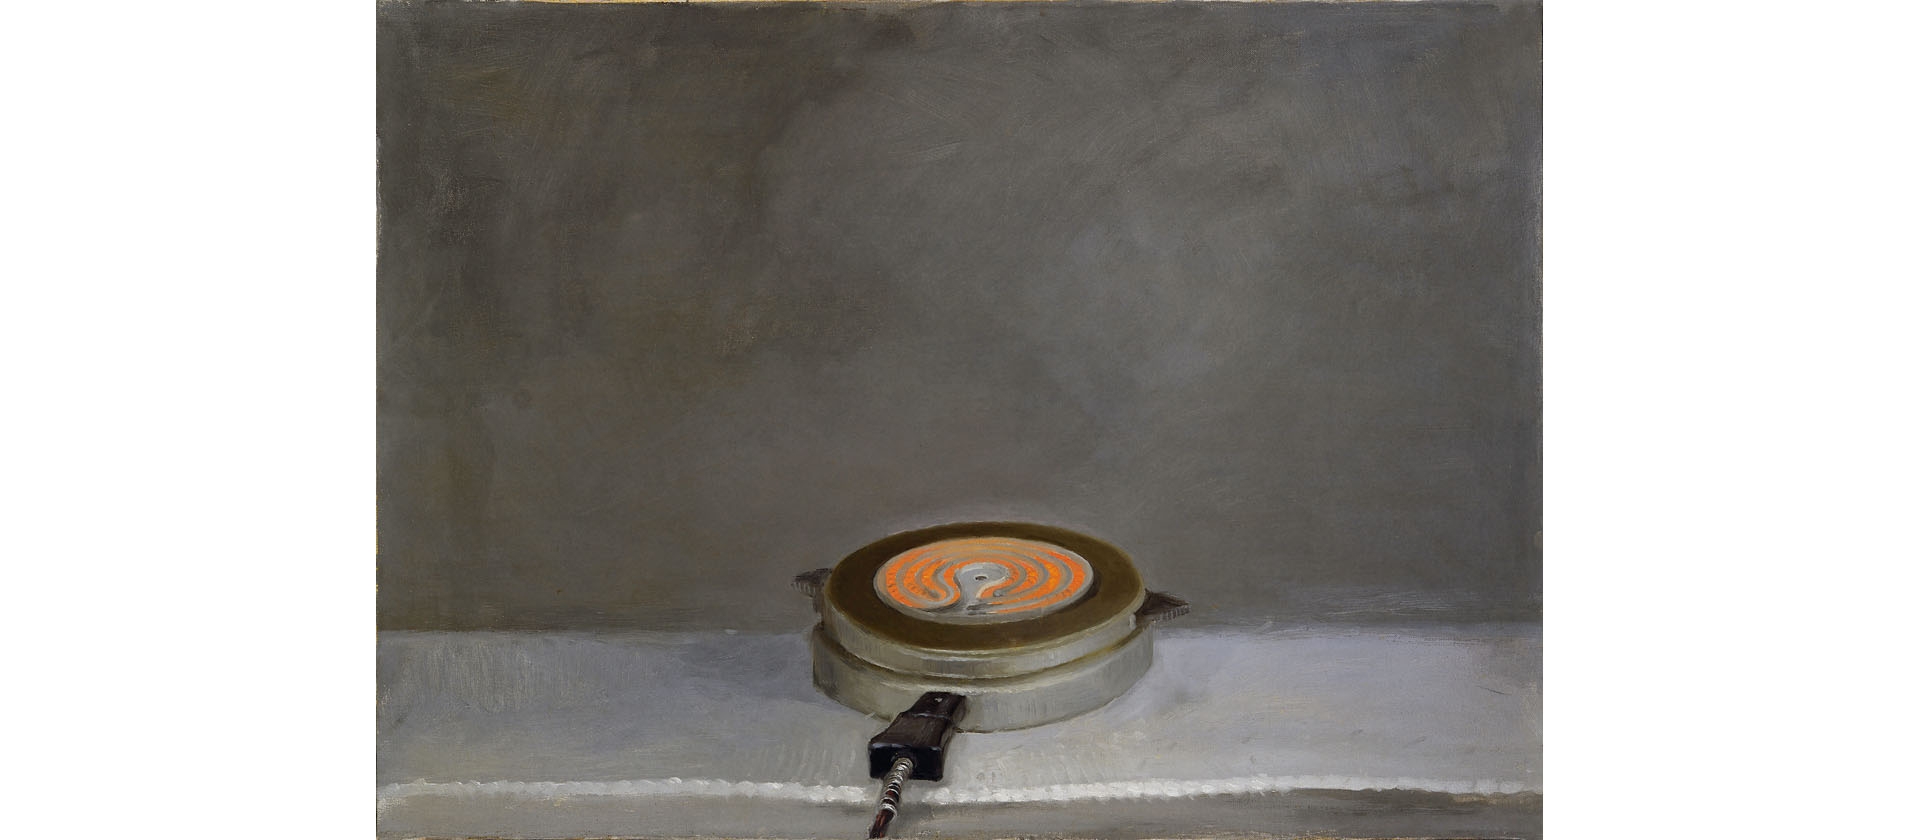 Vija Celmins, Hot Plate, 1964, Öl auf Leinwand, 63,5 x 88,9 cm, Collection of Renee and David McKee, © Vija Celmins, Image courtesy McKee Gallery